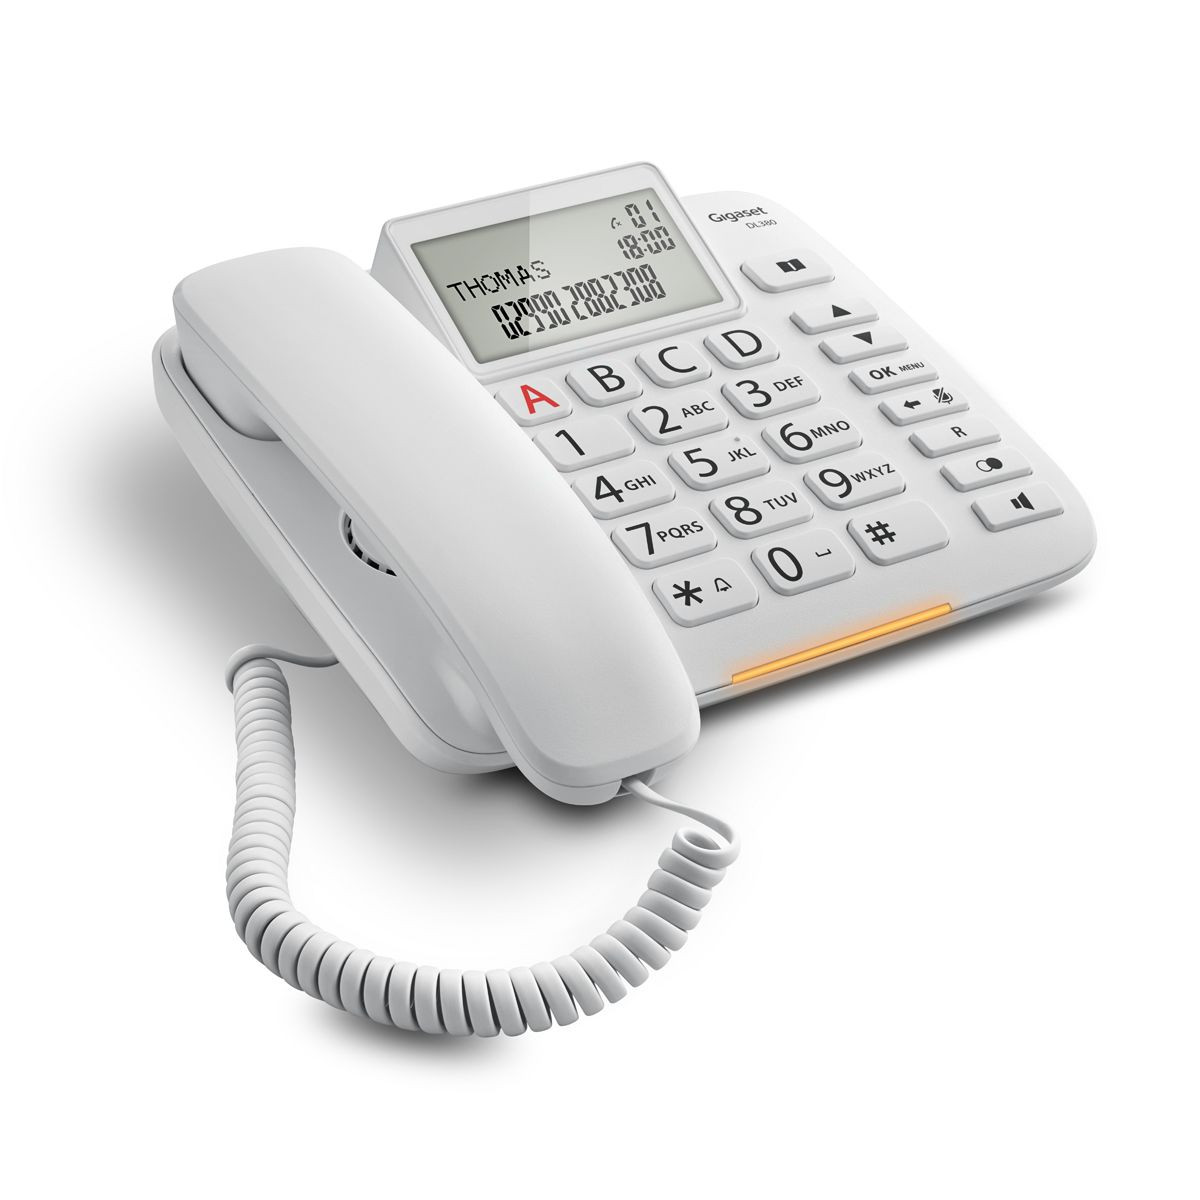 Image of Gigaset DL380 Telefono analogico Bianco Identificatore di chiamata